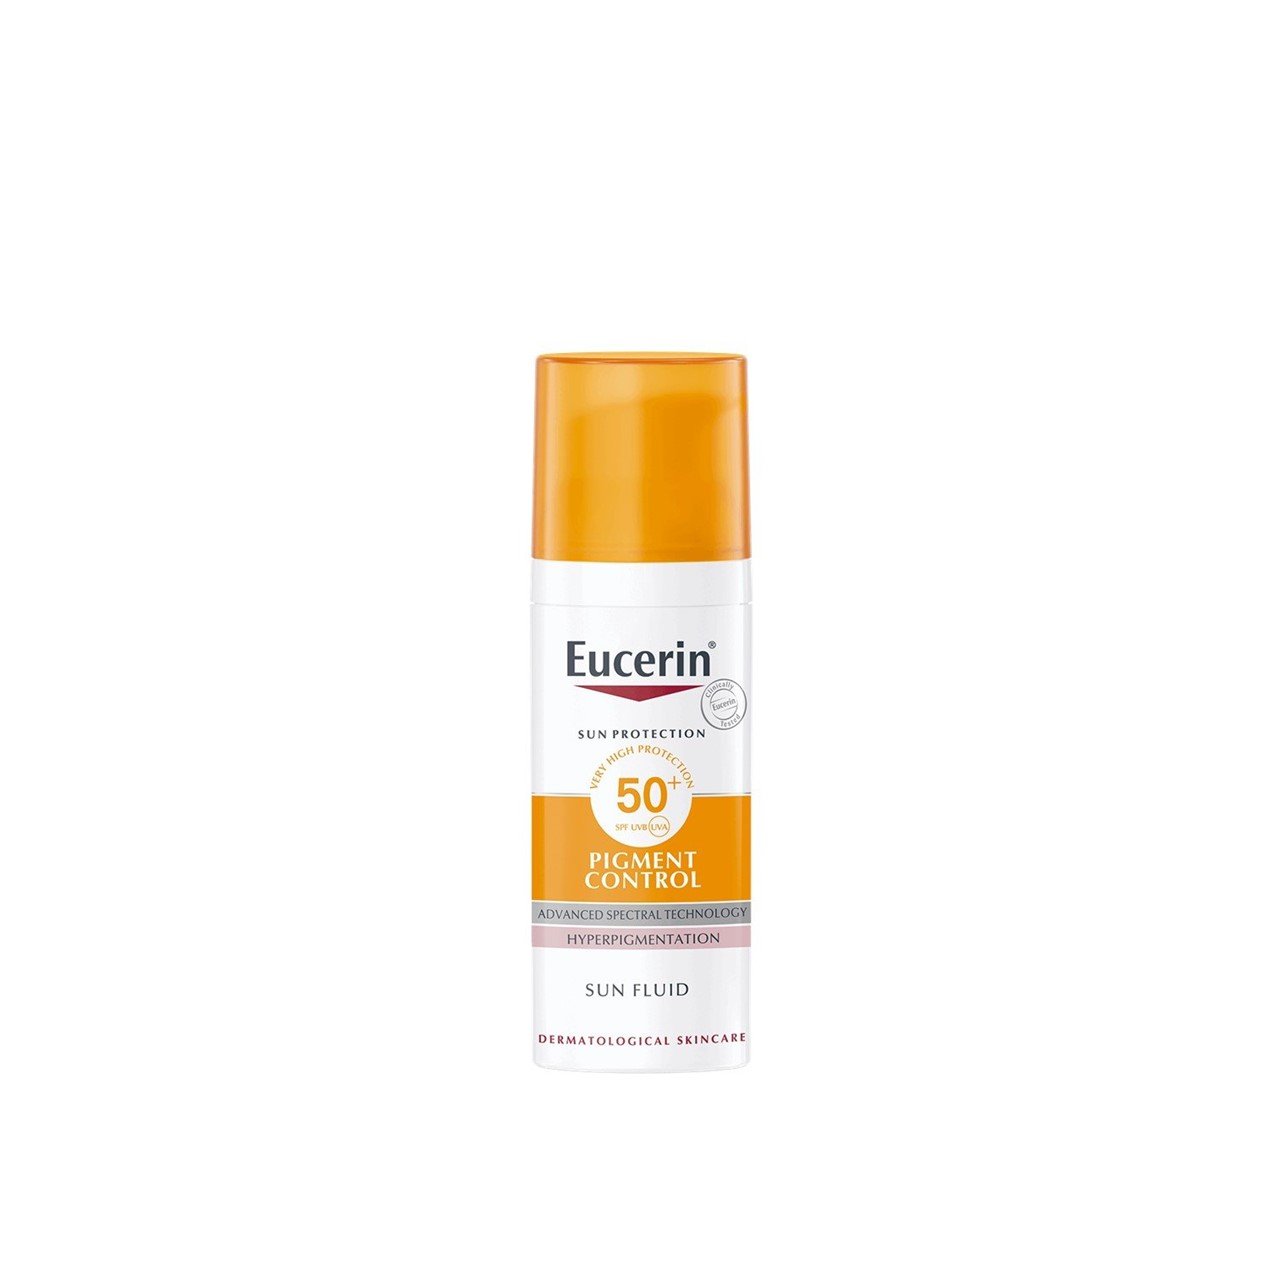 Sun Fluid Pigment Control SPF 50+, Facial sunscreen to prevent sun spots